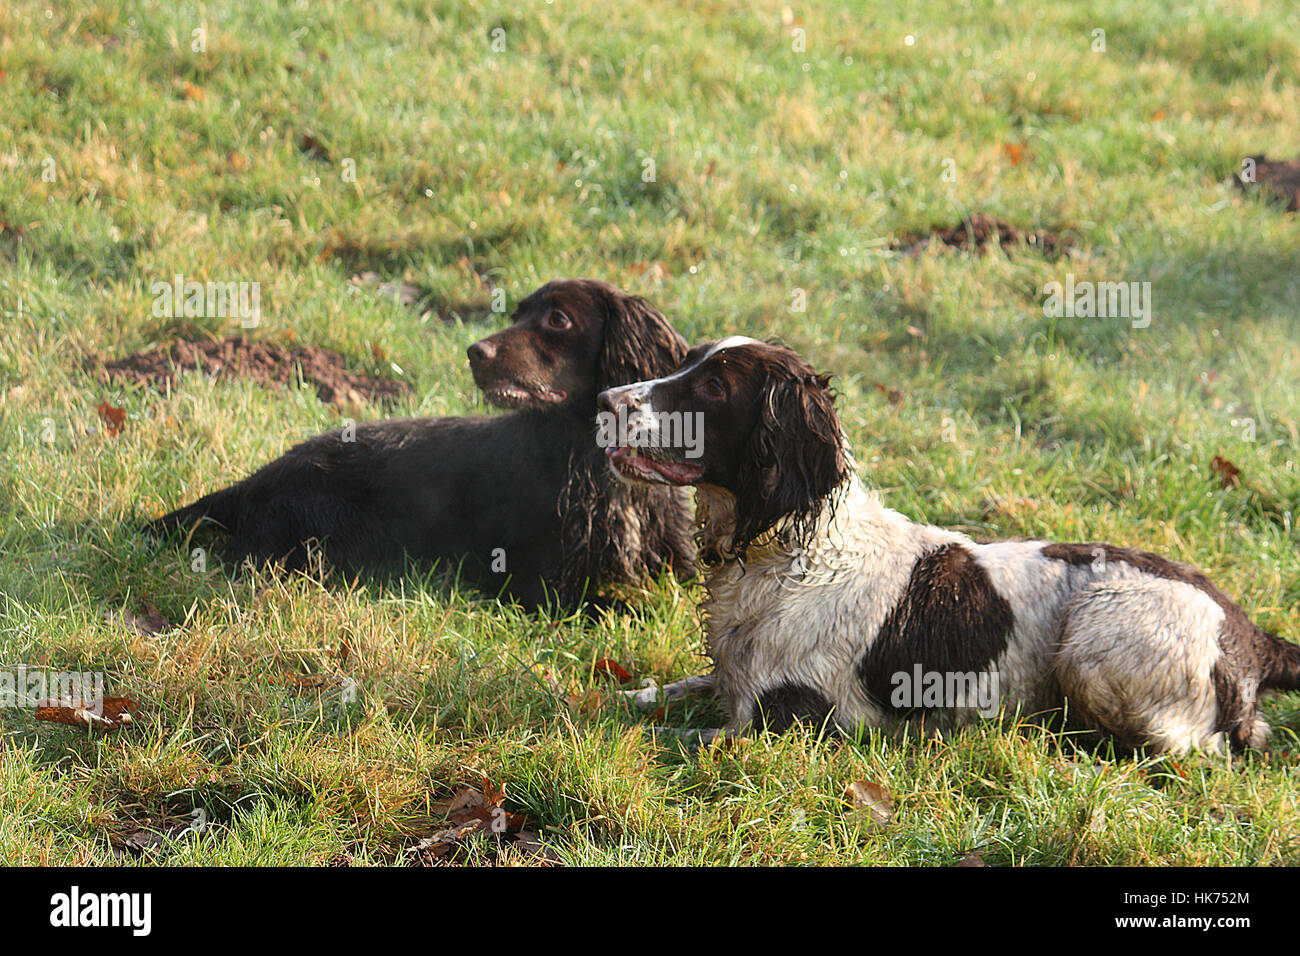 Pretty working type spaniel gundogs lying on grass together Stock Photo